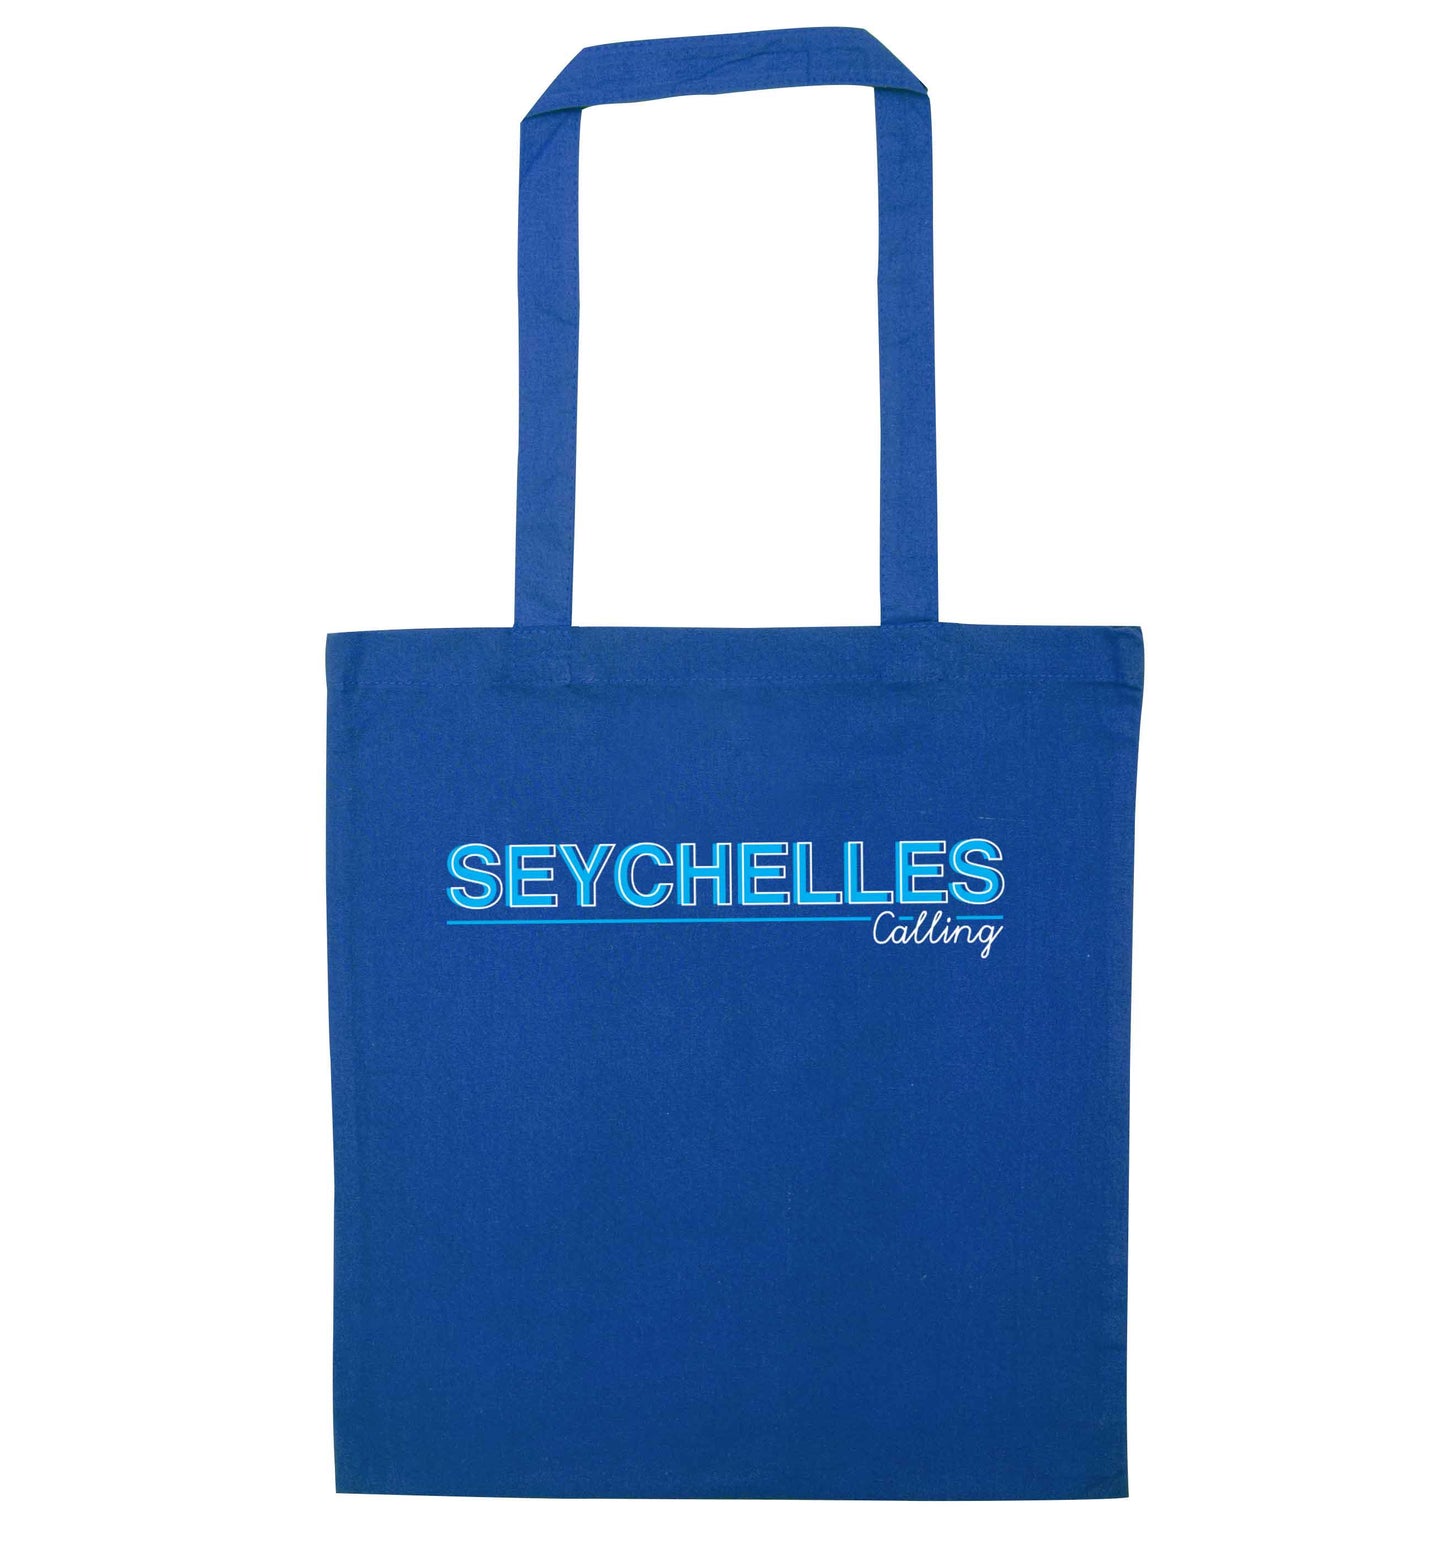 Seychelles calling blue tote bag